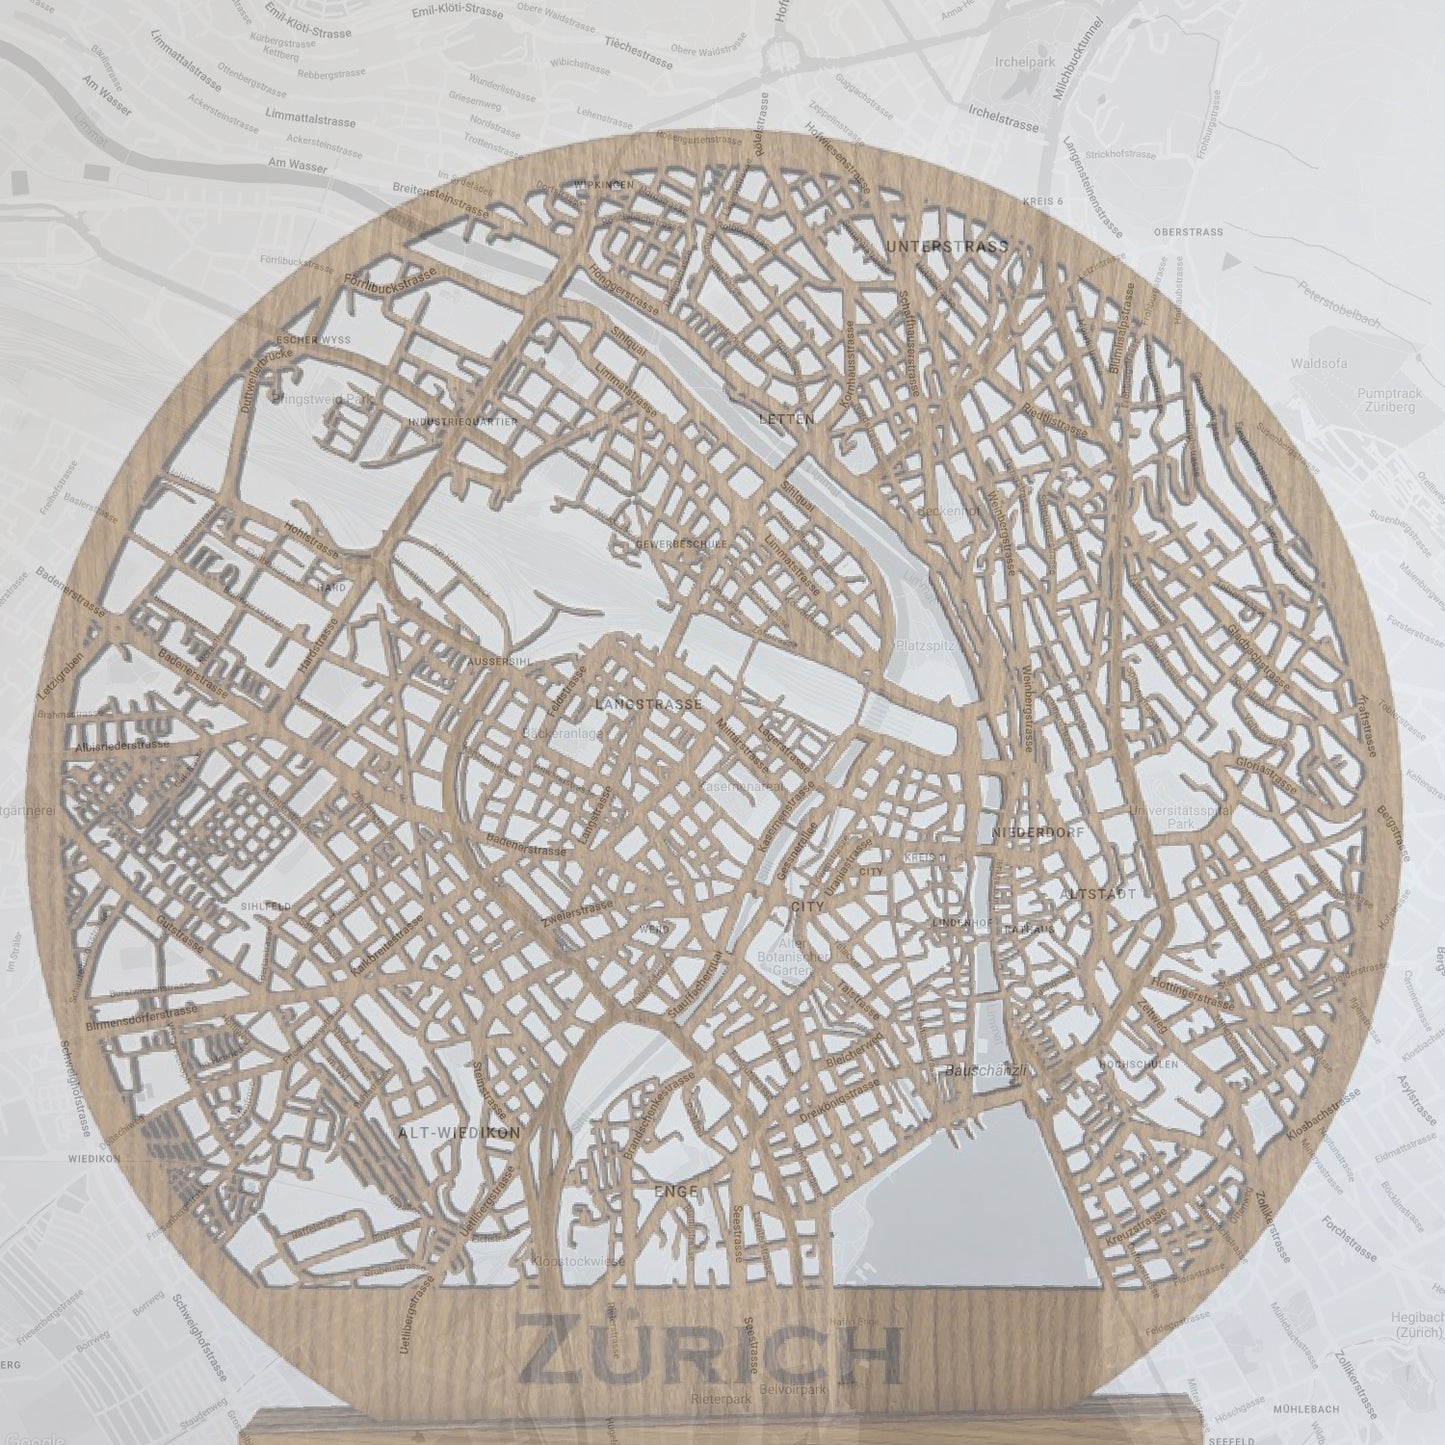 Stadtplan Zürich